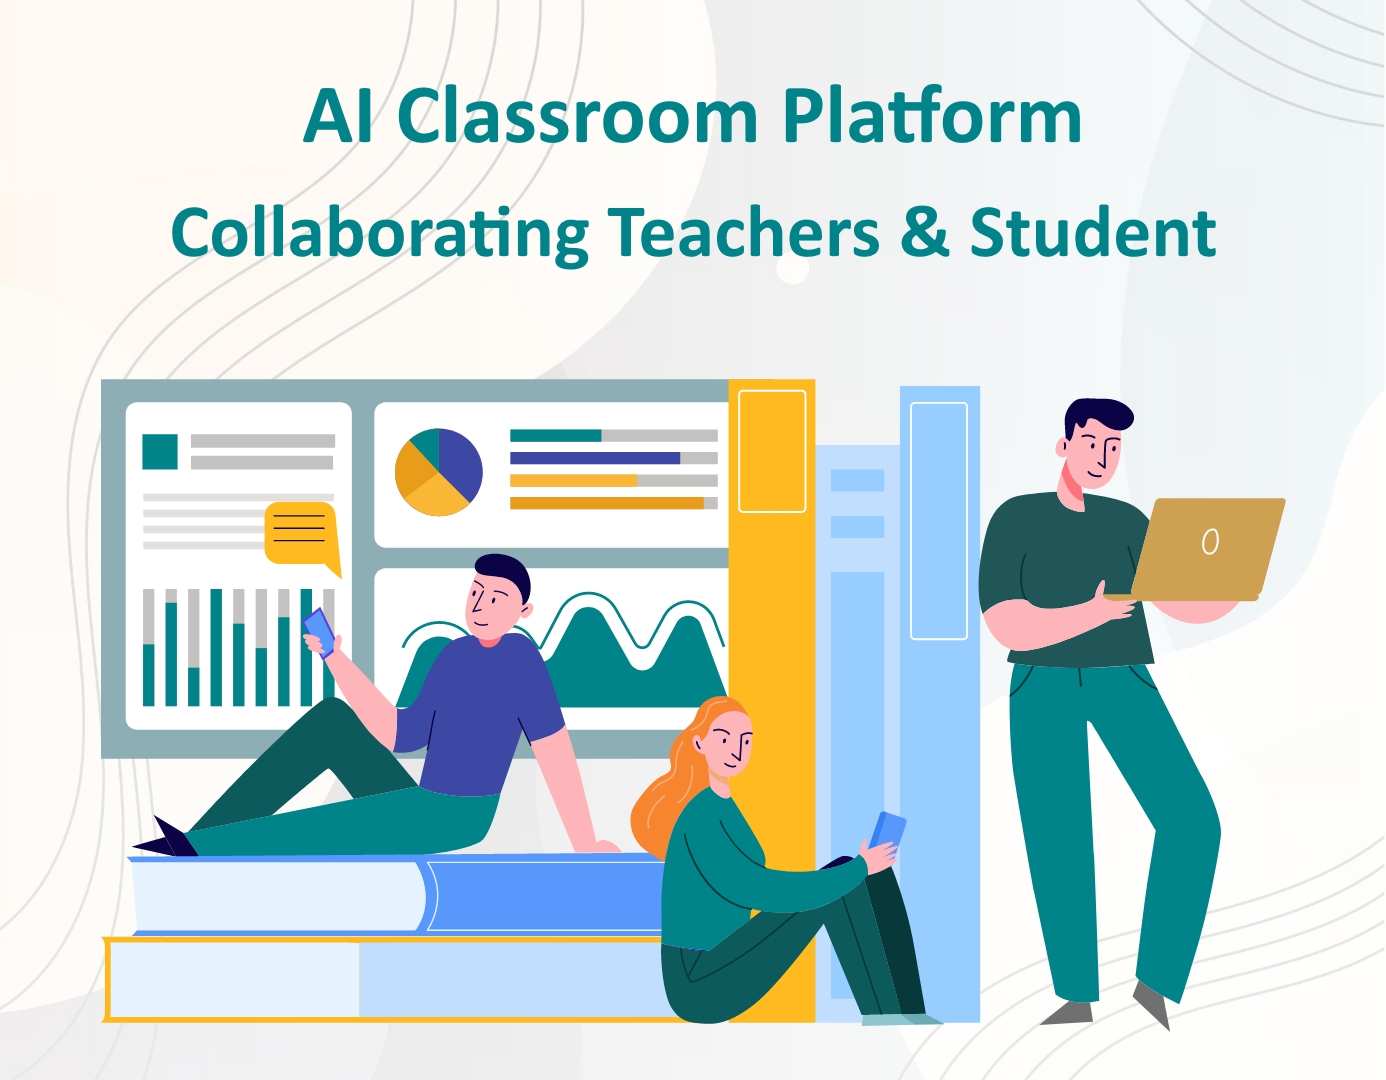 AI-enabled classroom academic platform facilitating student-teacher collaboration for enhanced learning experiences